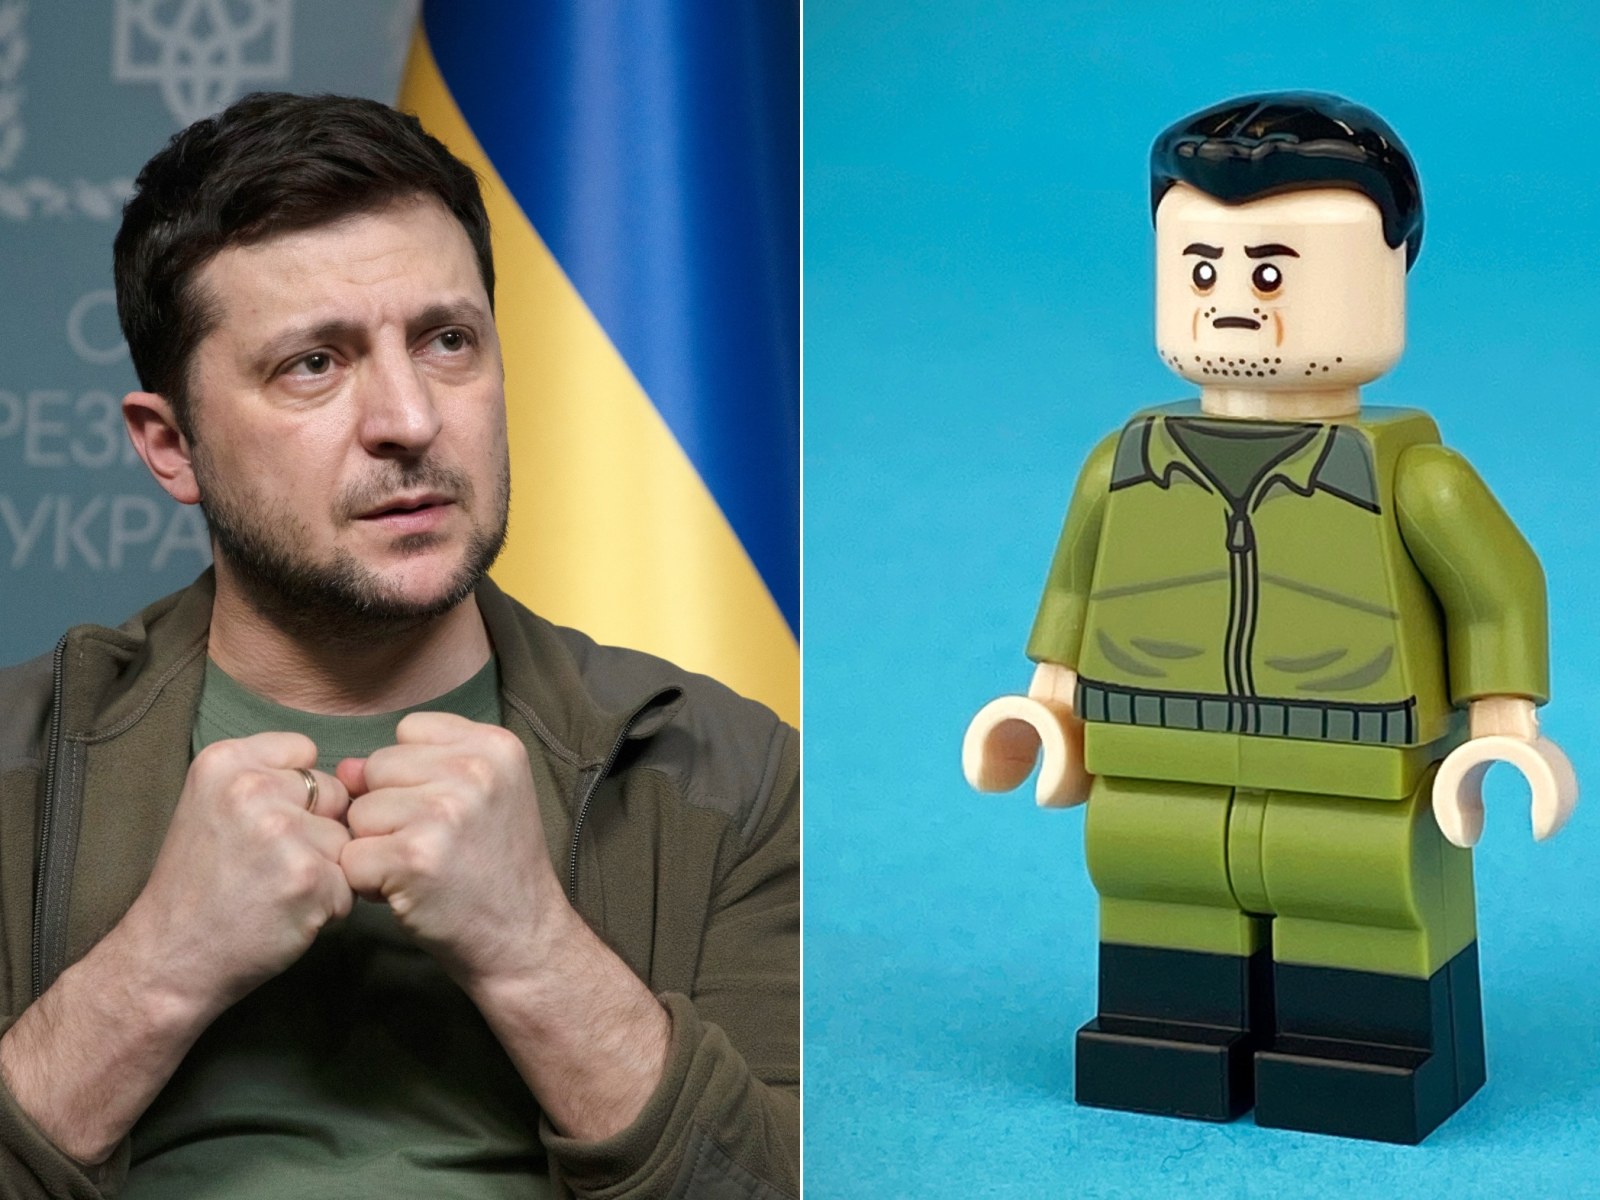 Zelensky Lego Figures Released To Raise for Ukraine Refugees